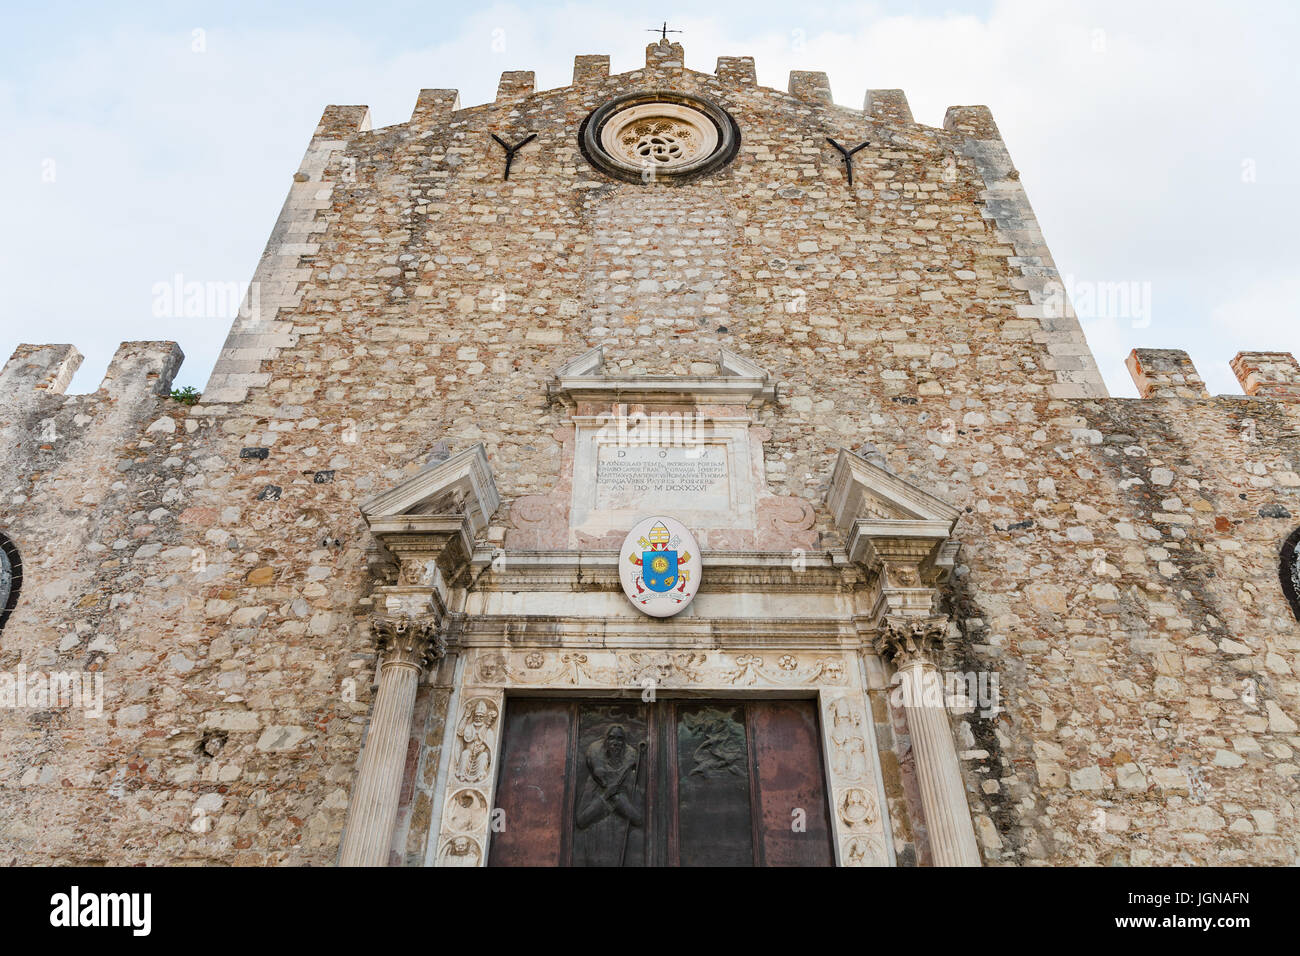 travel to Sicily, Italy - facade of Duomo di Taormina (Cathedral San Nicolo di Bari) in Taormina city Stock Photo